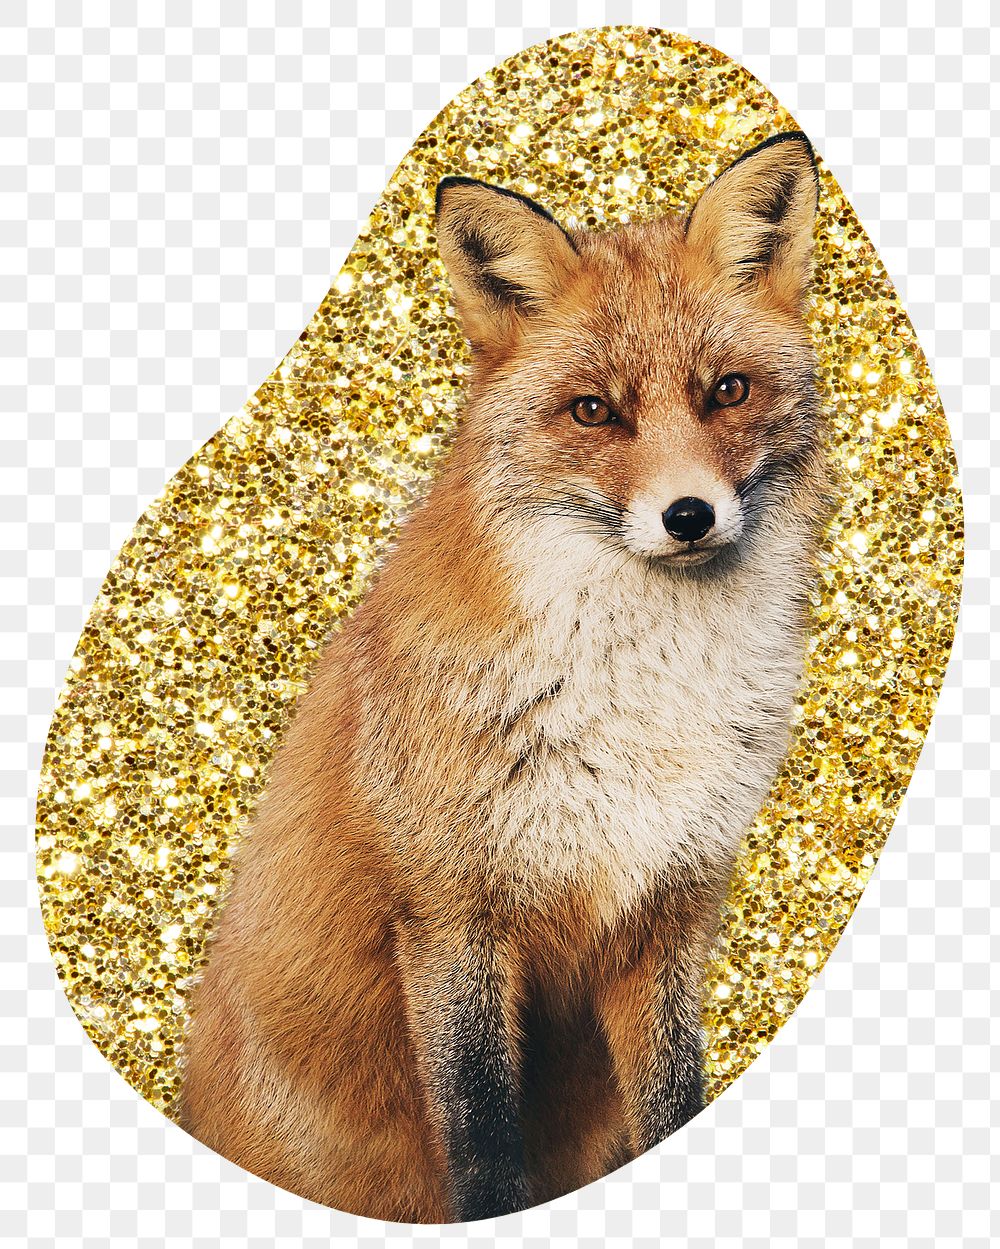 Fox png badge sticker, gold glitter blob shape, transparent background